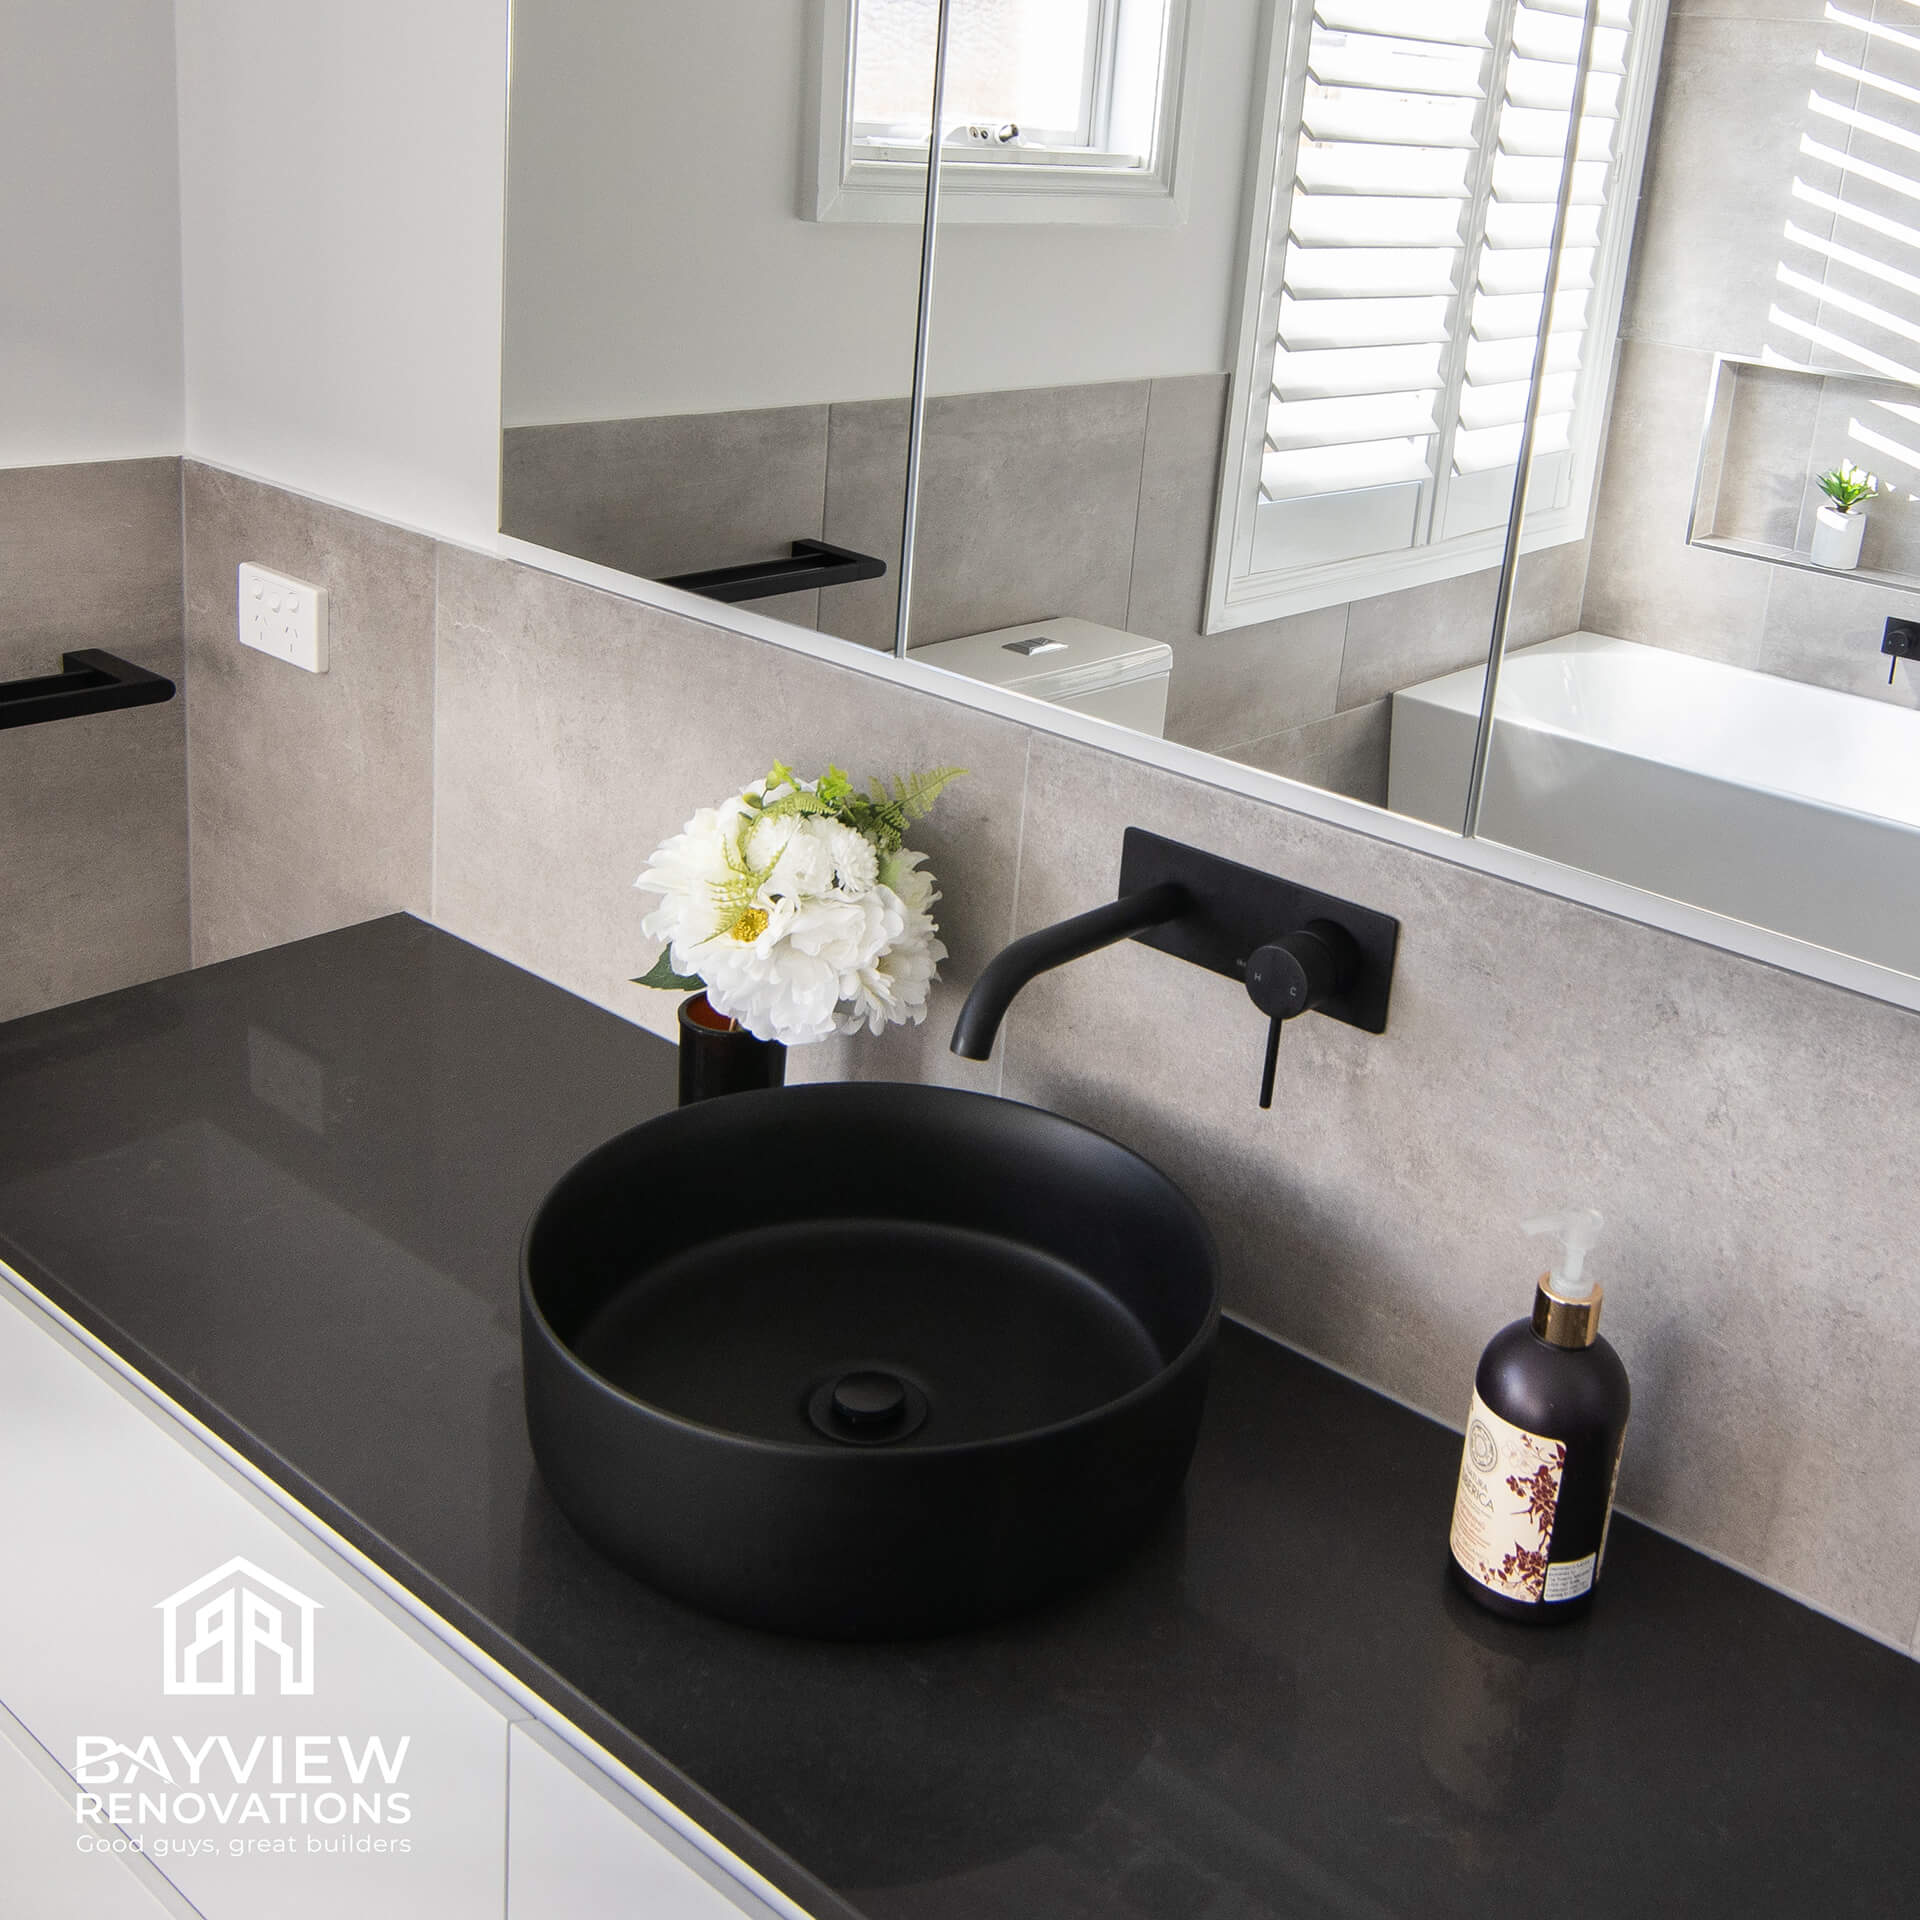 modern bathroom renovation by Bayview Renovations